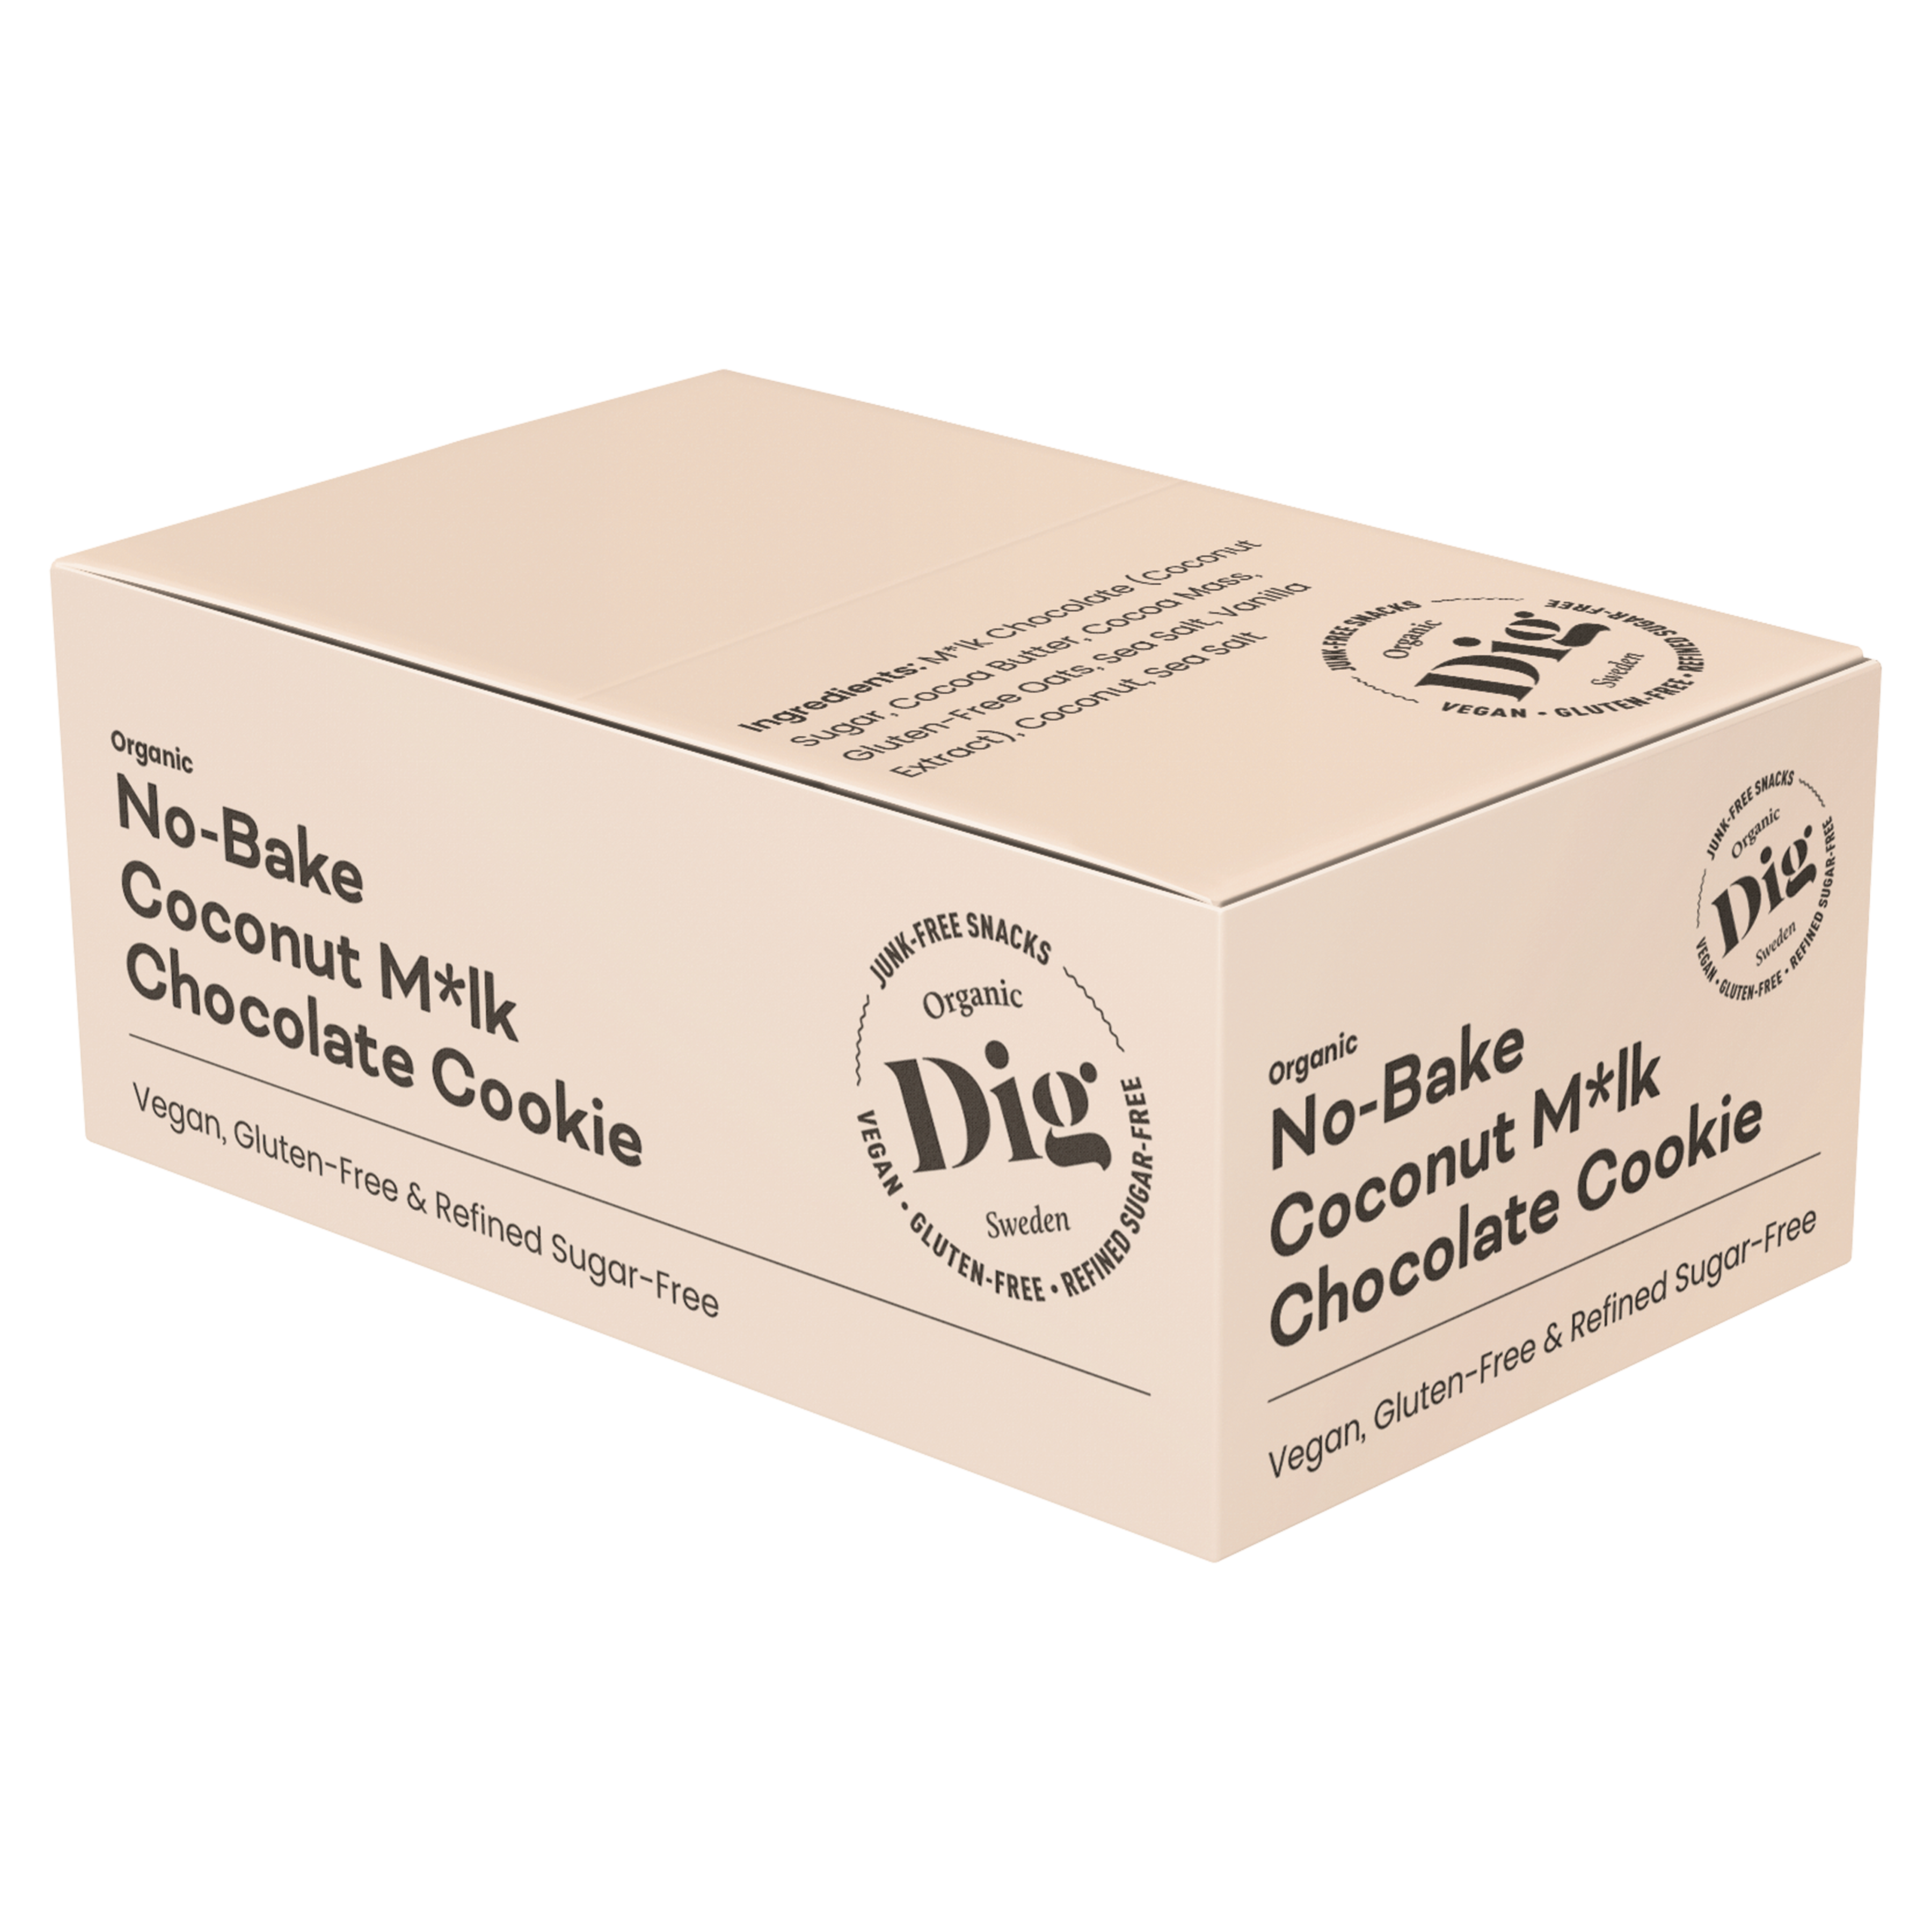 No-Bake Coconut M*lk Chocolate Cookie - Box 12 st